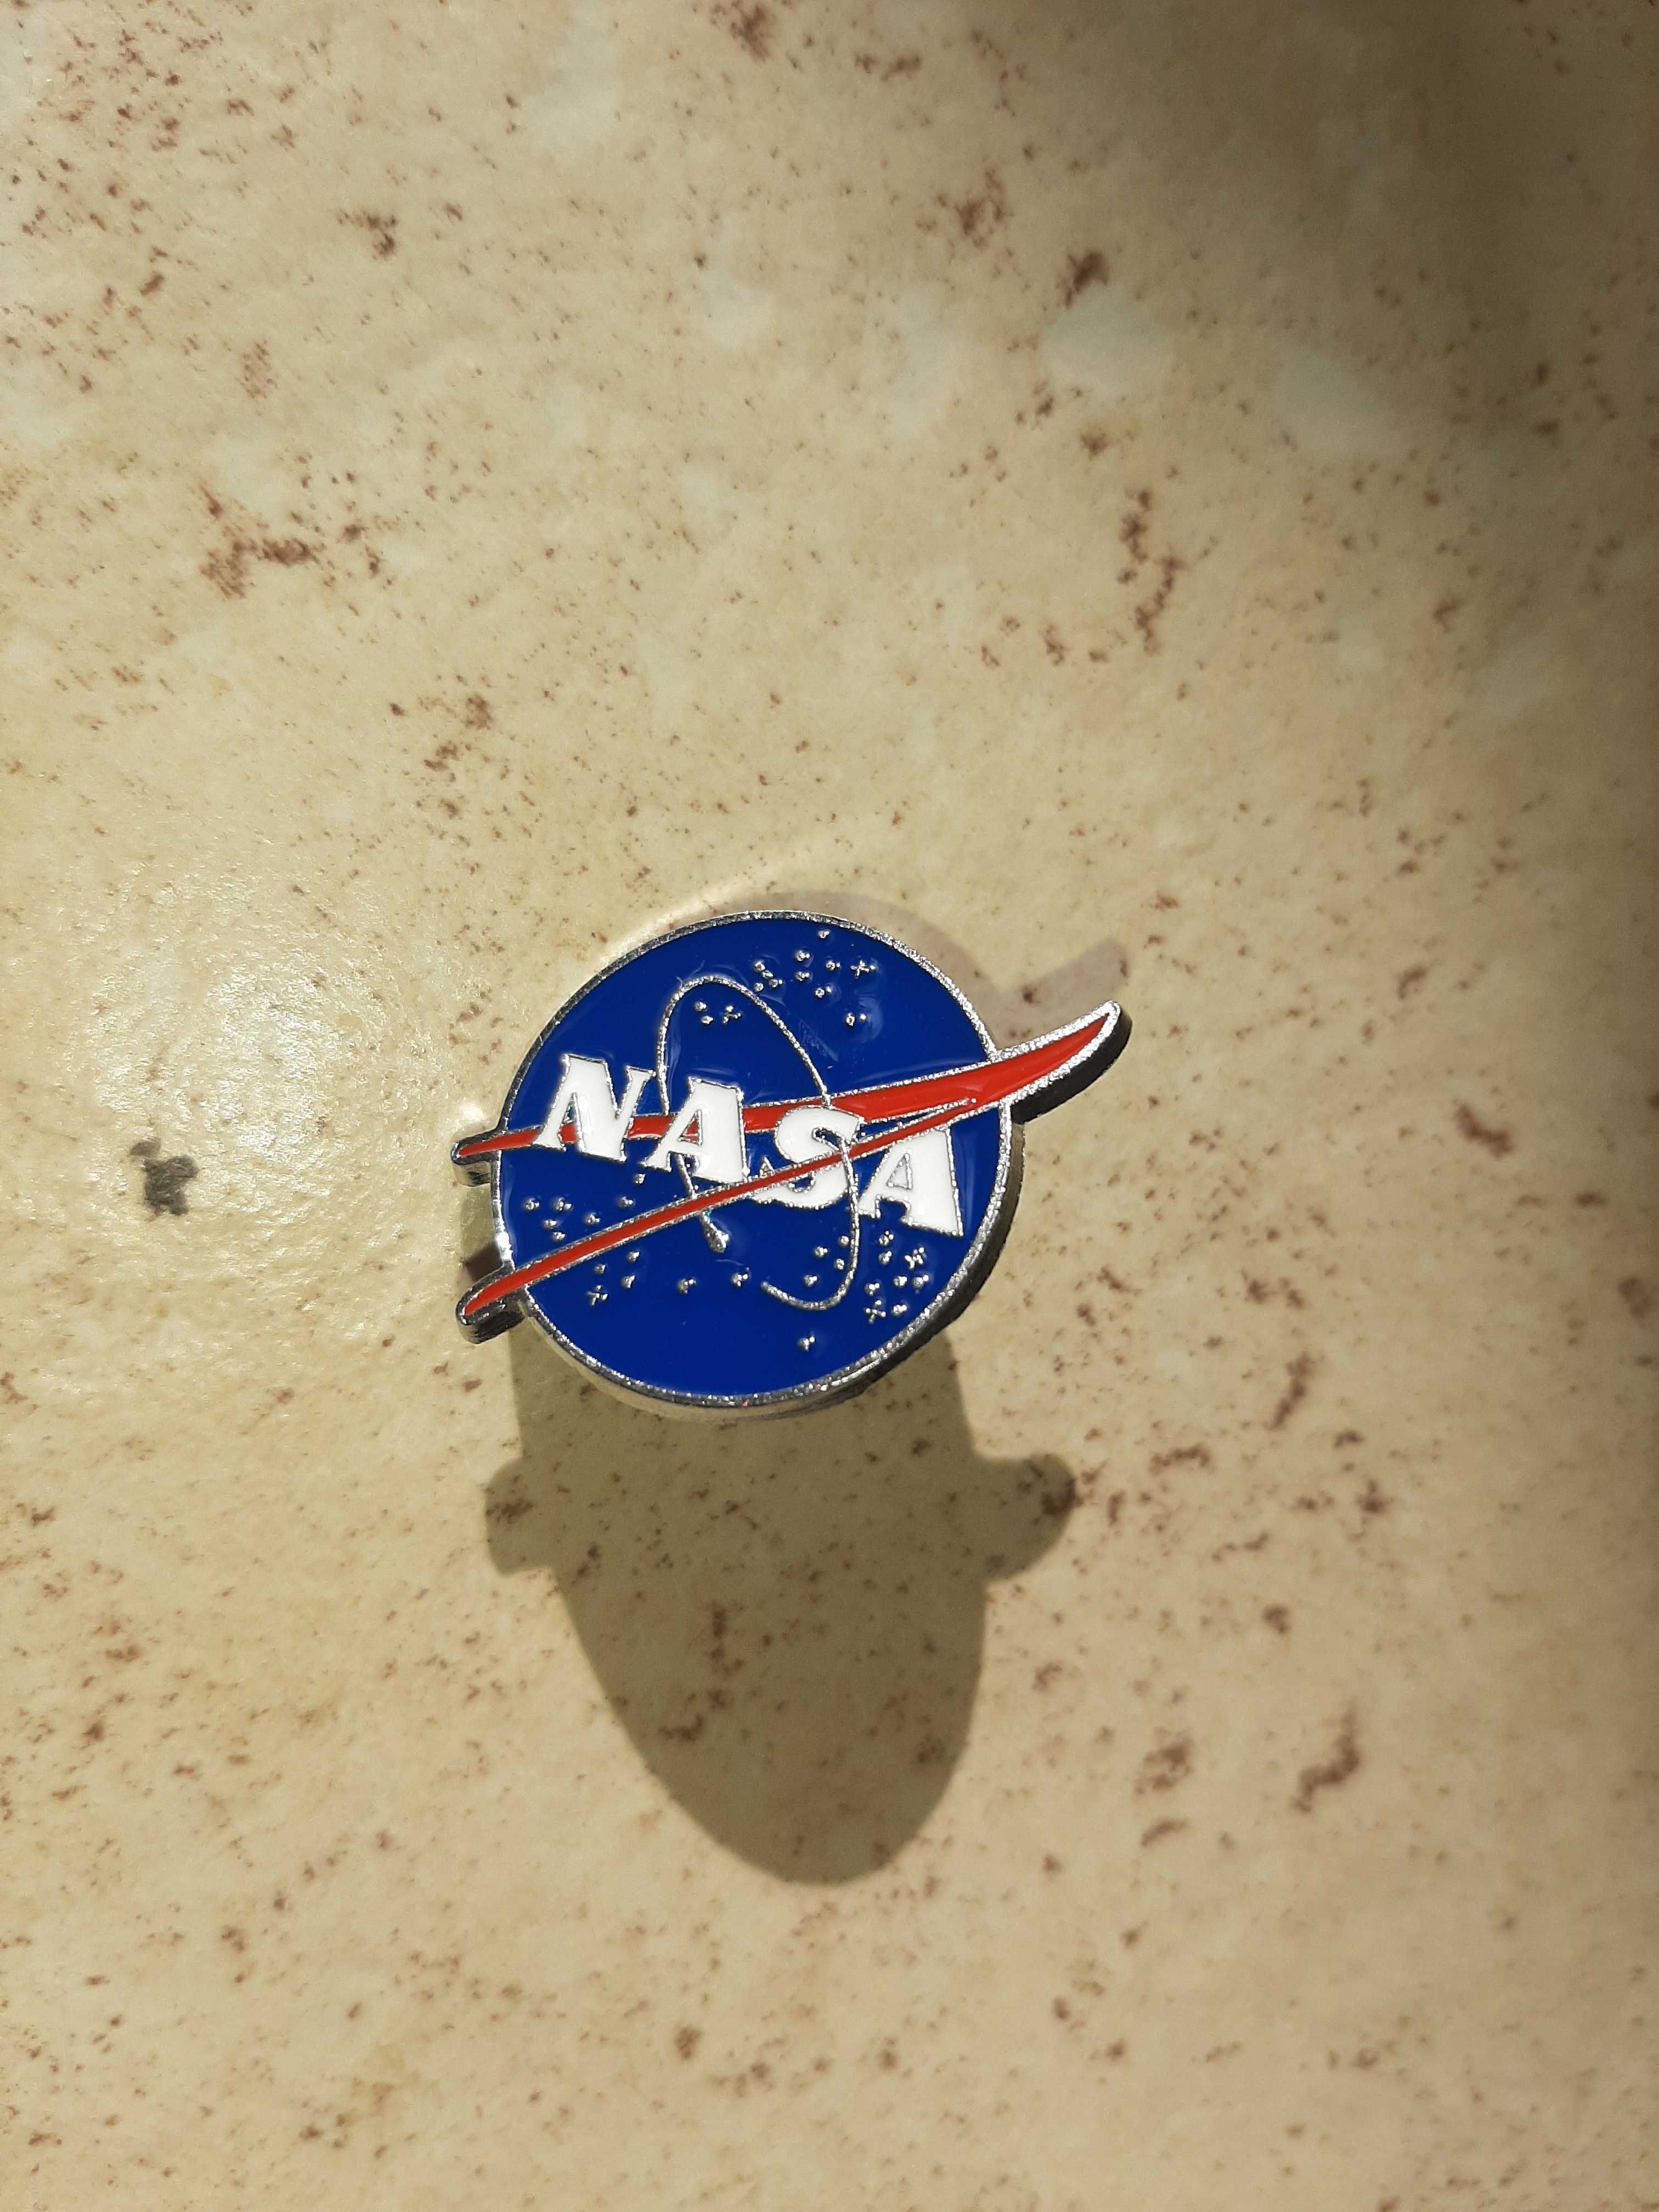 Znaczek/przypinka NASA